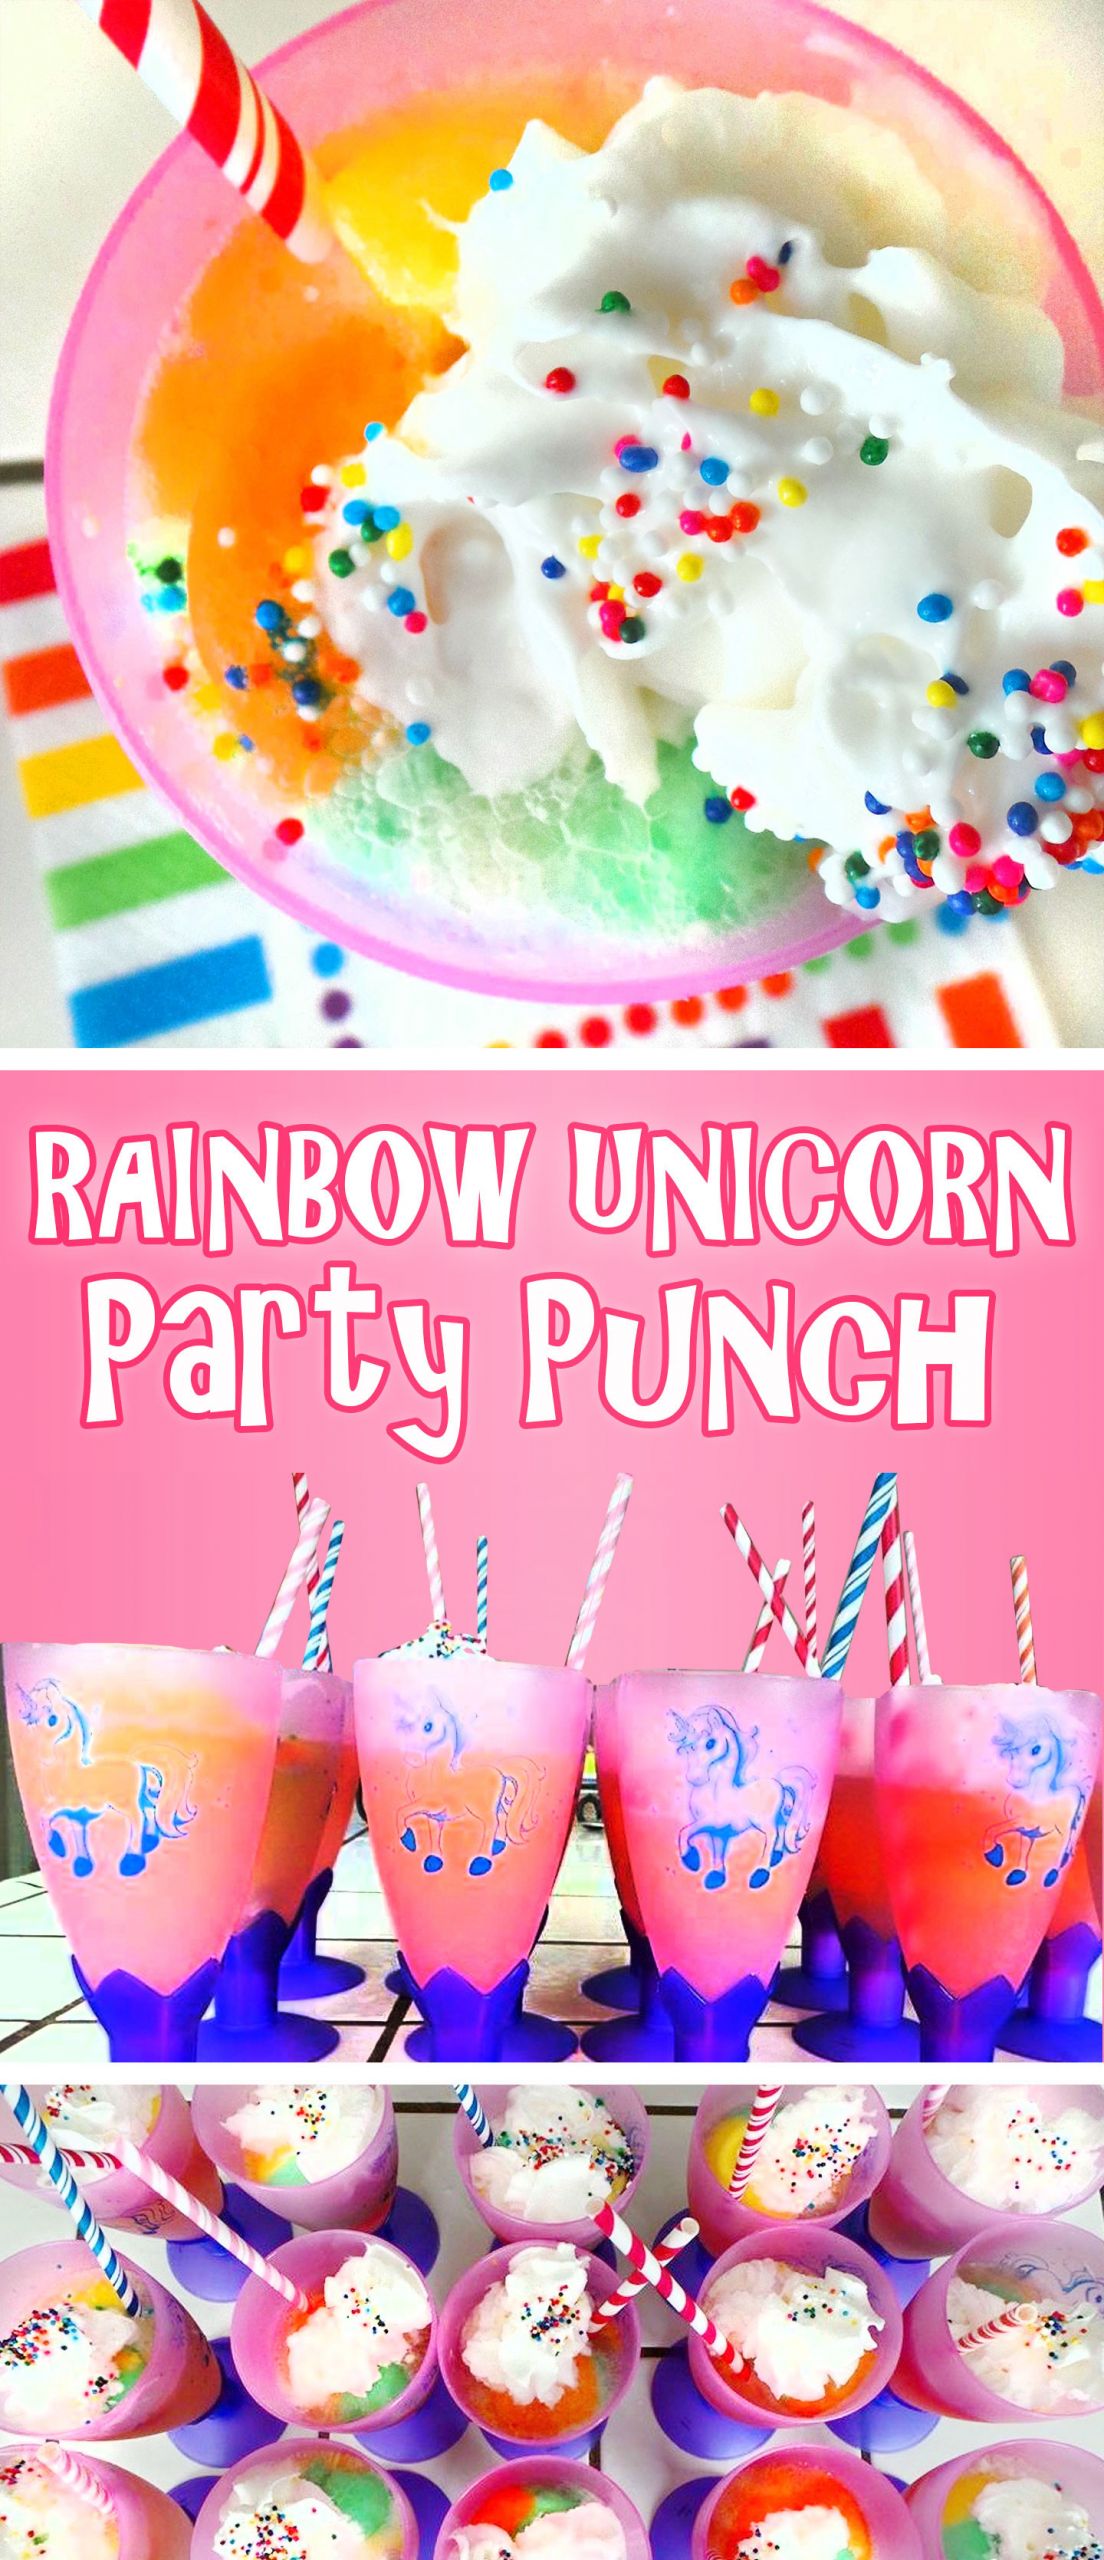 Healthy Unicorn Party Food Ideas
 Rainbow Unicorn Party Punch